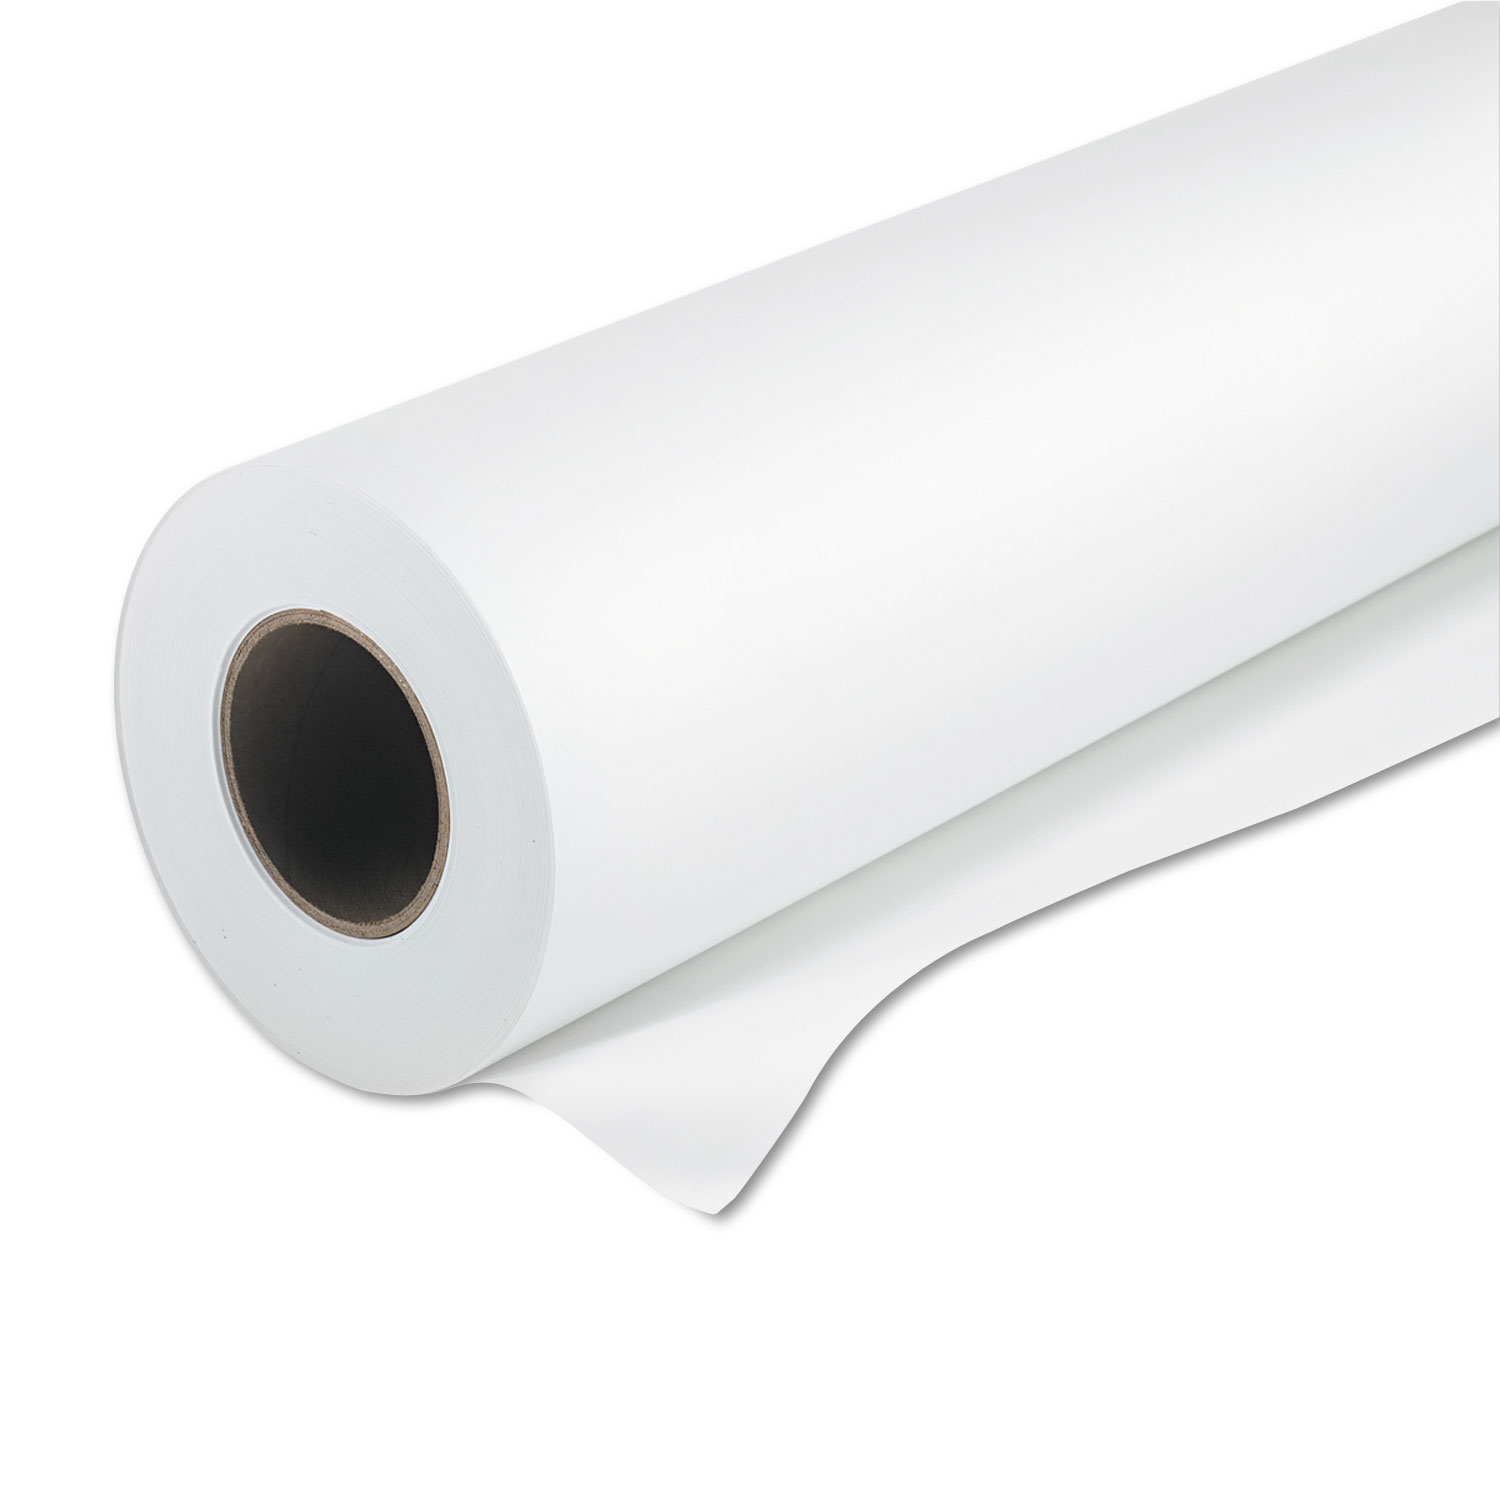  Iconex 45162 Amerigo Wide-Format Paper, 2 Core, 24 lb, 36 x 150 ft, Coated White (ICX90750213) 